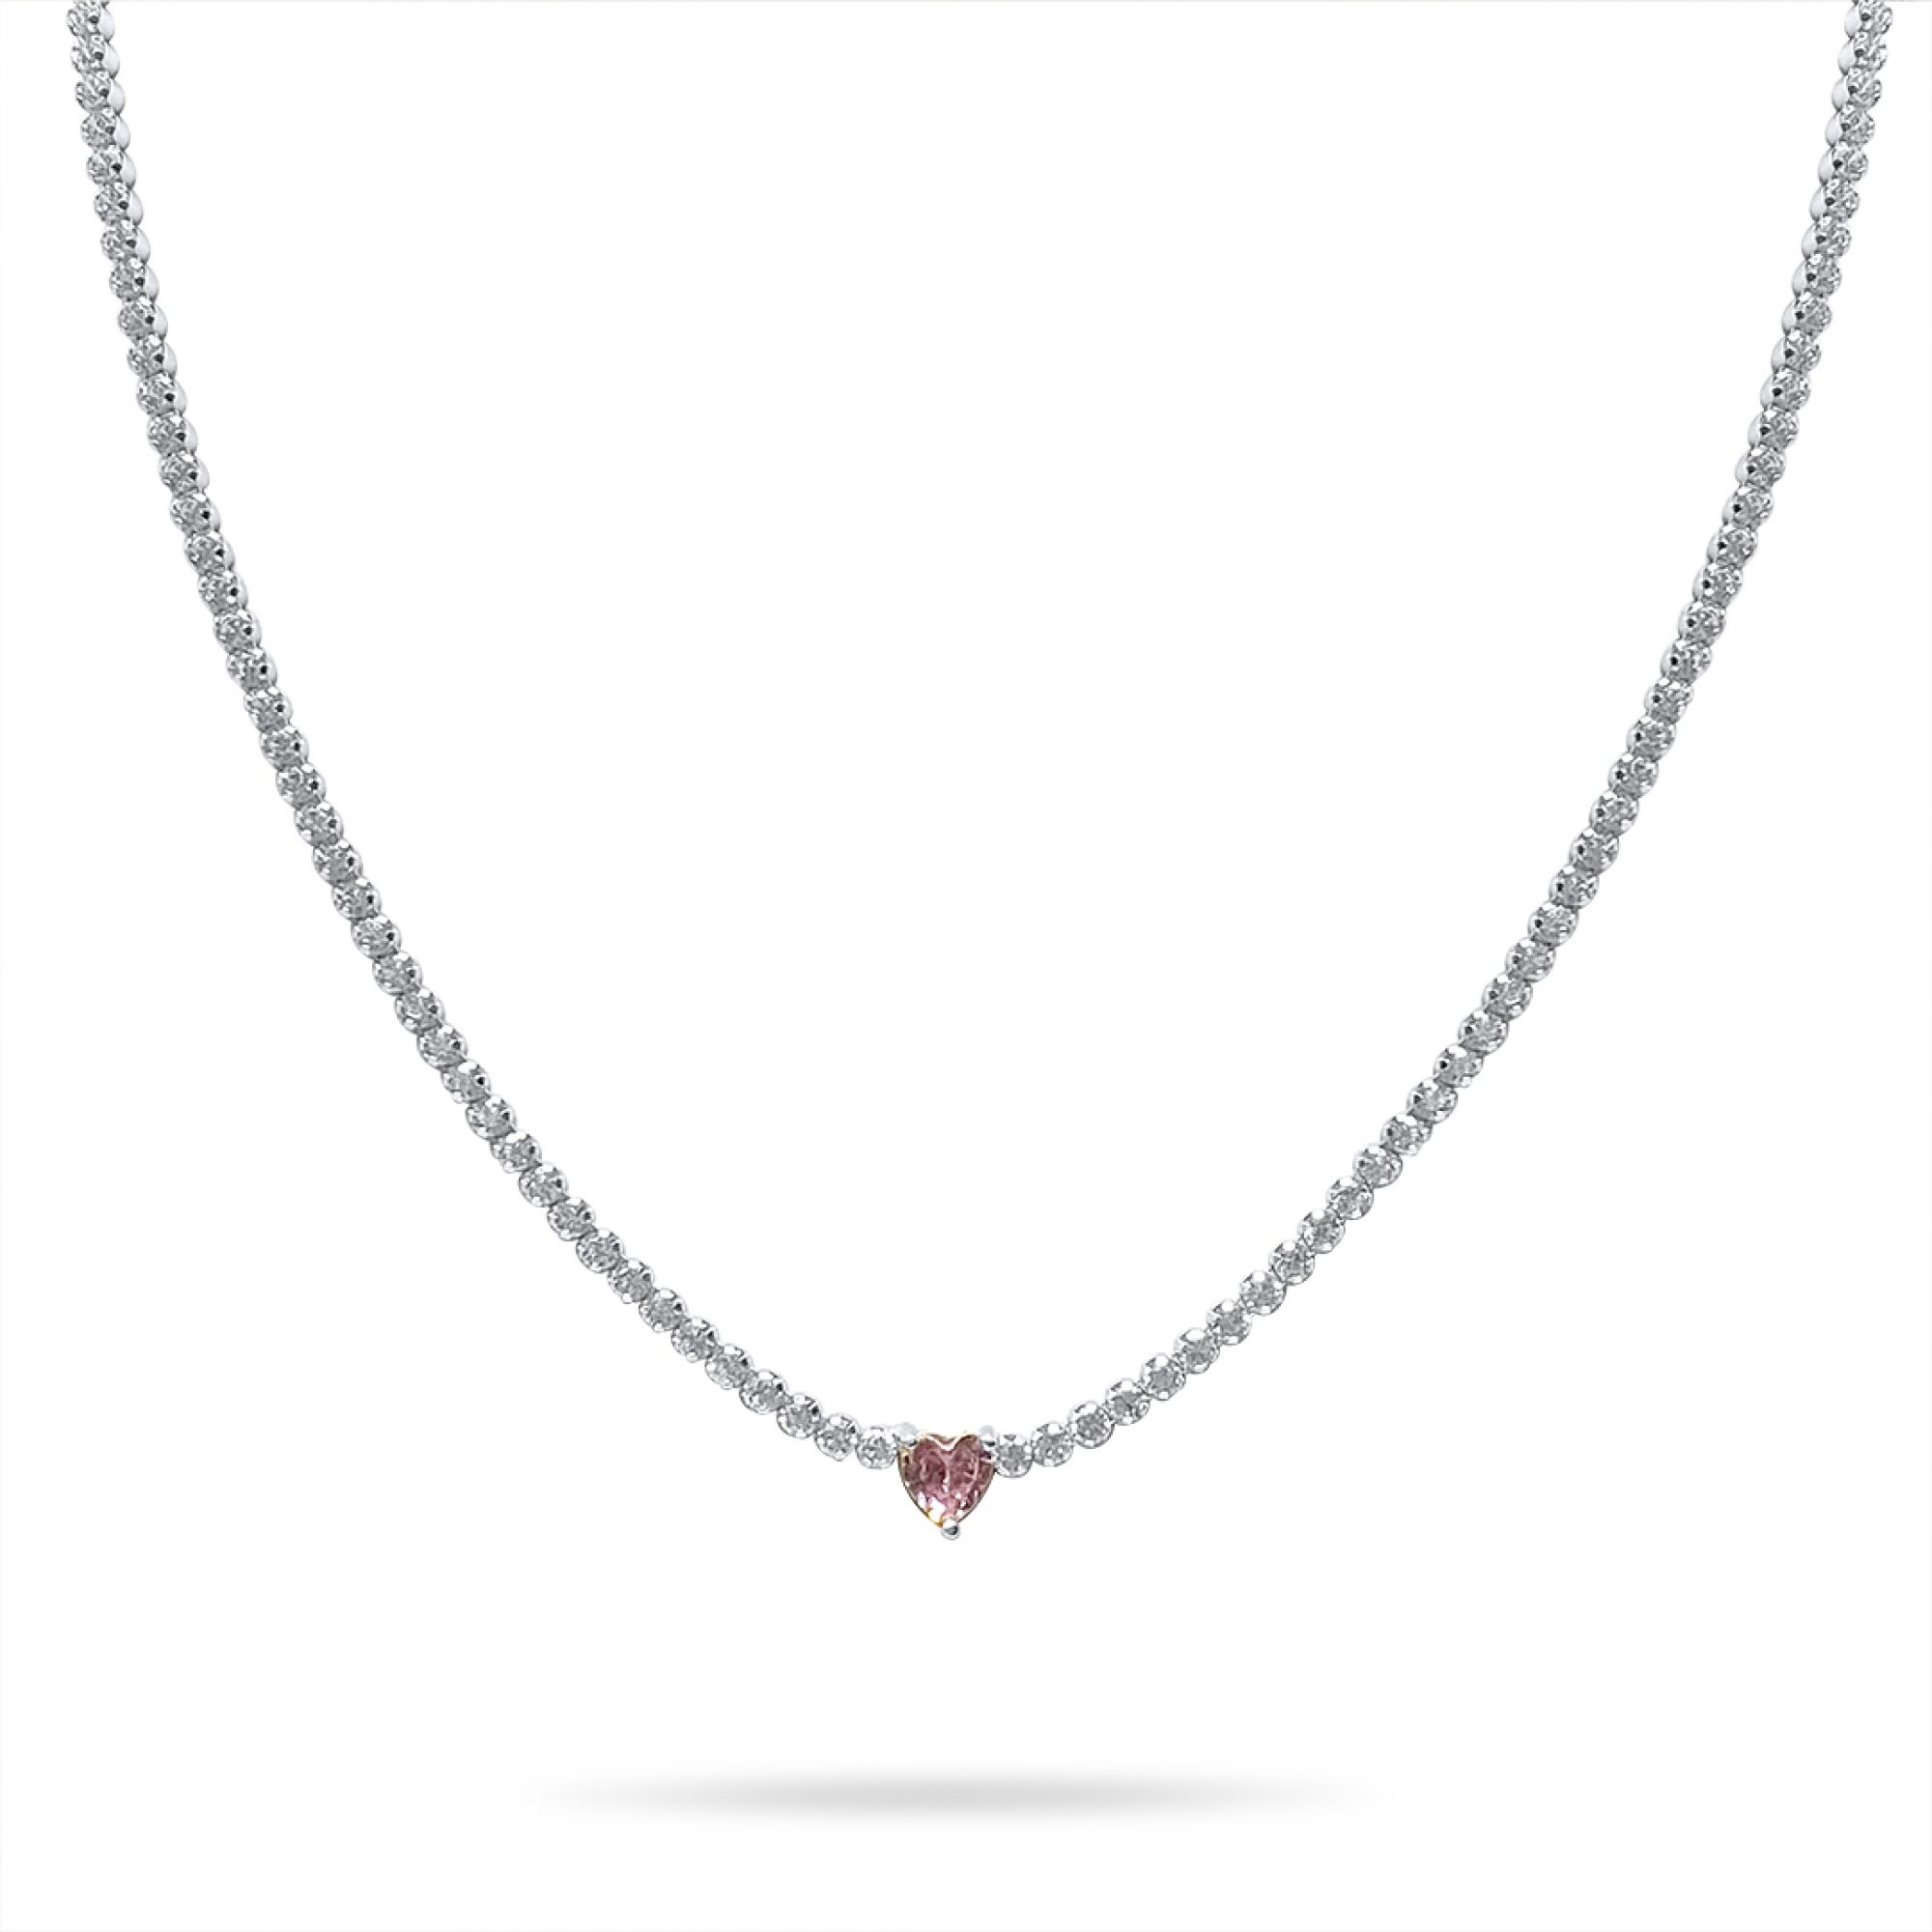 Heart necklace with zircon and pink quartz stones